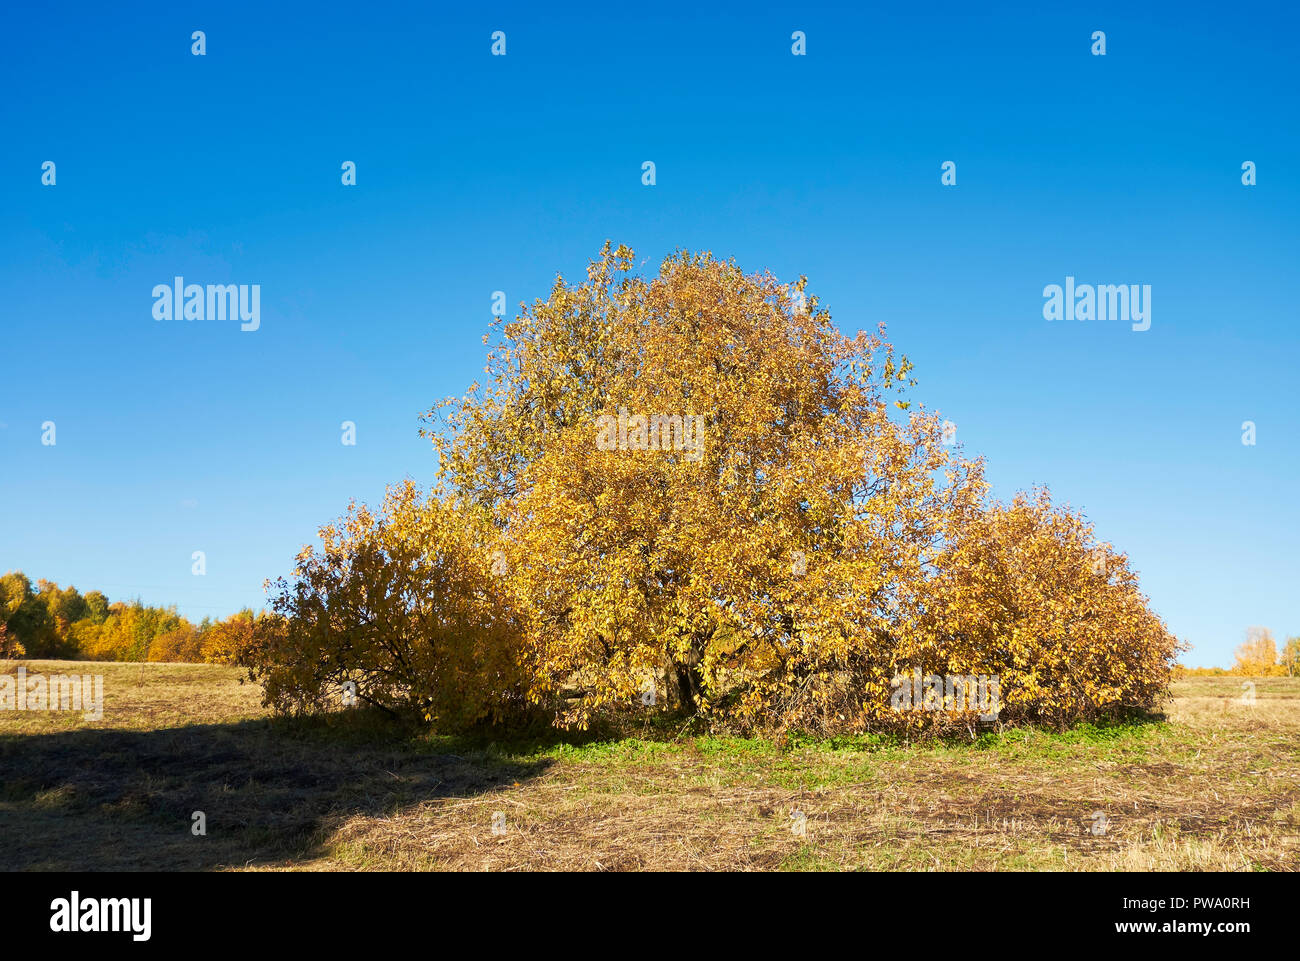 Mit goldgelbem Laub im Herbst Baum. Bitsa Bitsevski Park (Park), Moskau, Russland. Stockfoto